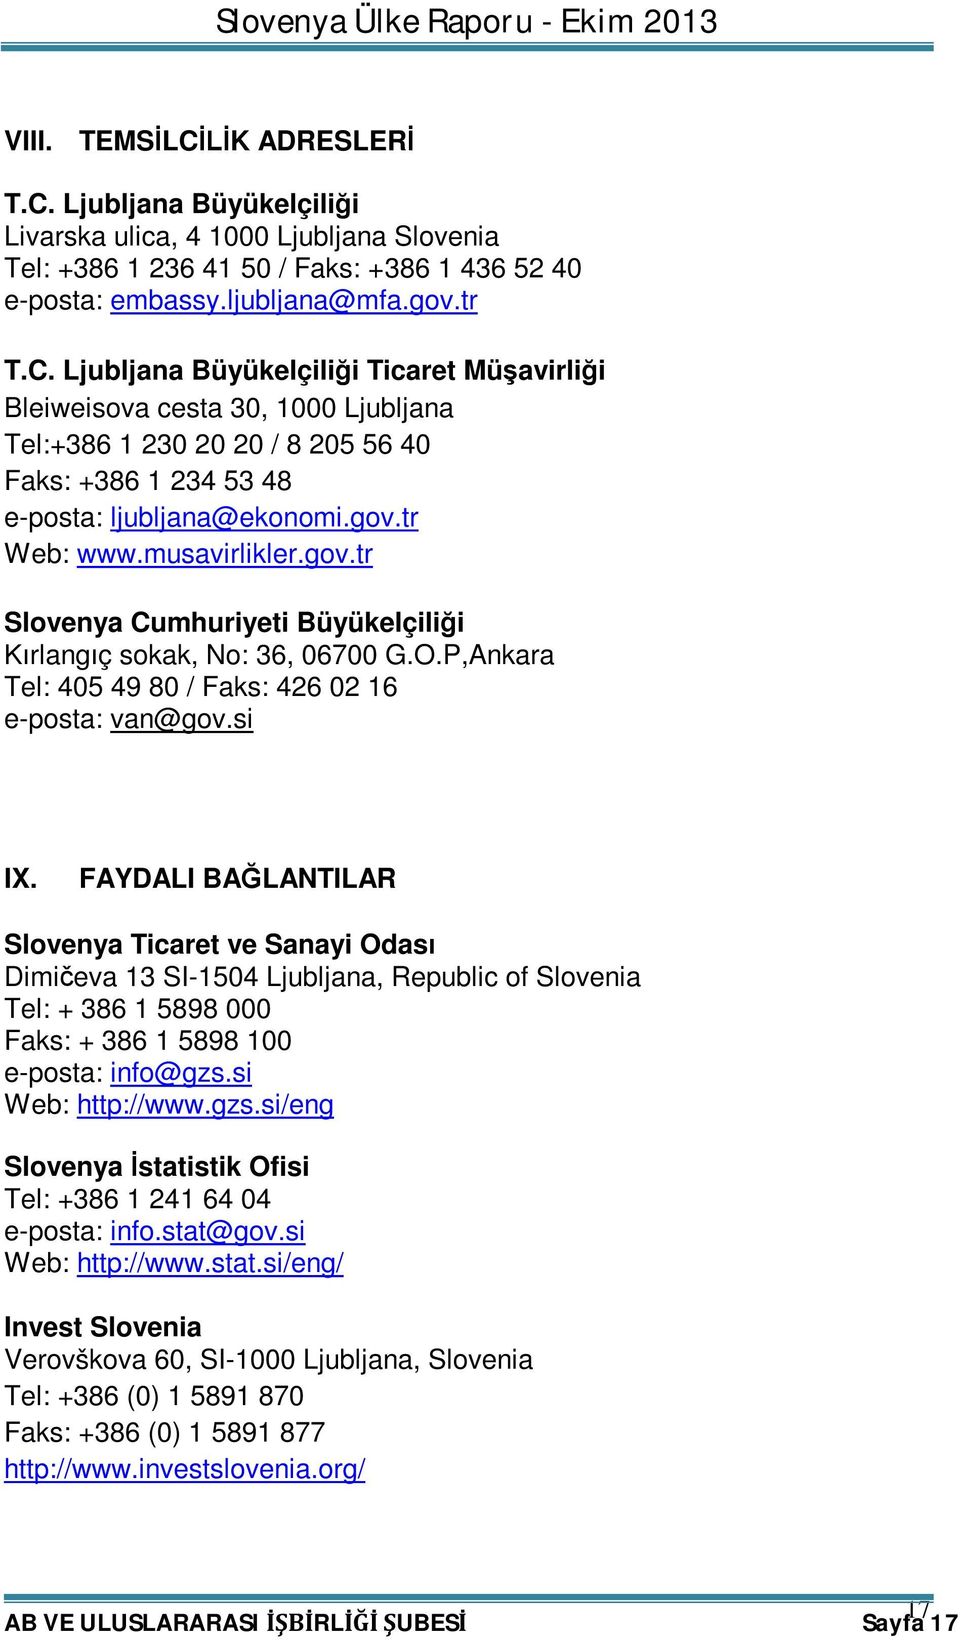 FAYDALI BAĞLANTILAR Slovenya Ticaret ve Sanayi Odası Dimičeva 13 SI-1504 Ljubljana, Republic of Slovenia Tel: + 386 1 5898 000 Faks: + 386 1 5898 100 e-posta: info@gzs.